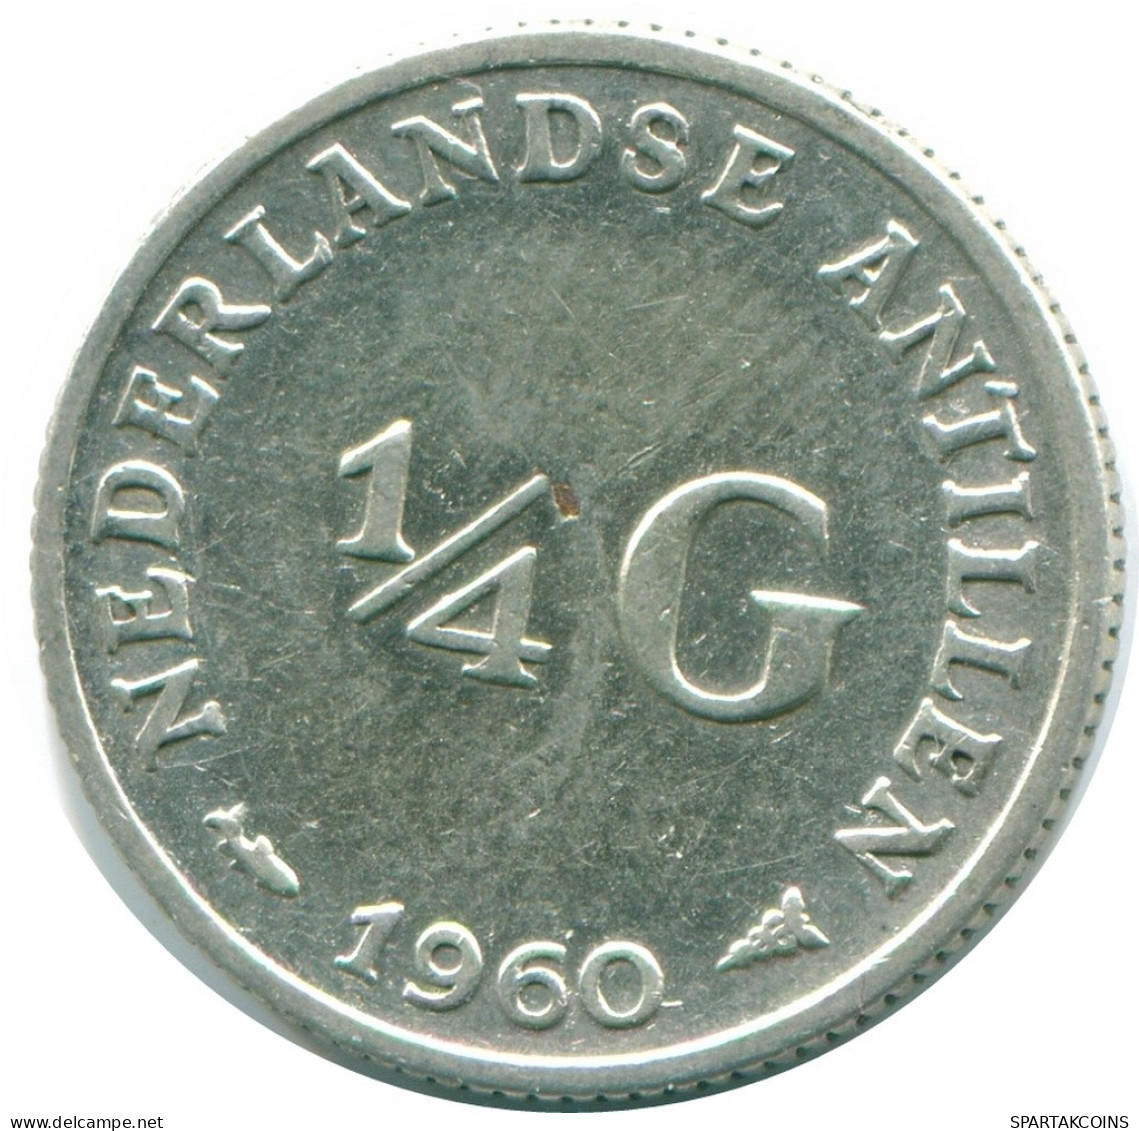 1/4 GULDEN 1960 NIEDERLÄNDISCHE ANTILLEN SILBER Koloniale Münze #NL11038.4.D.A - Netherlands Antilles